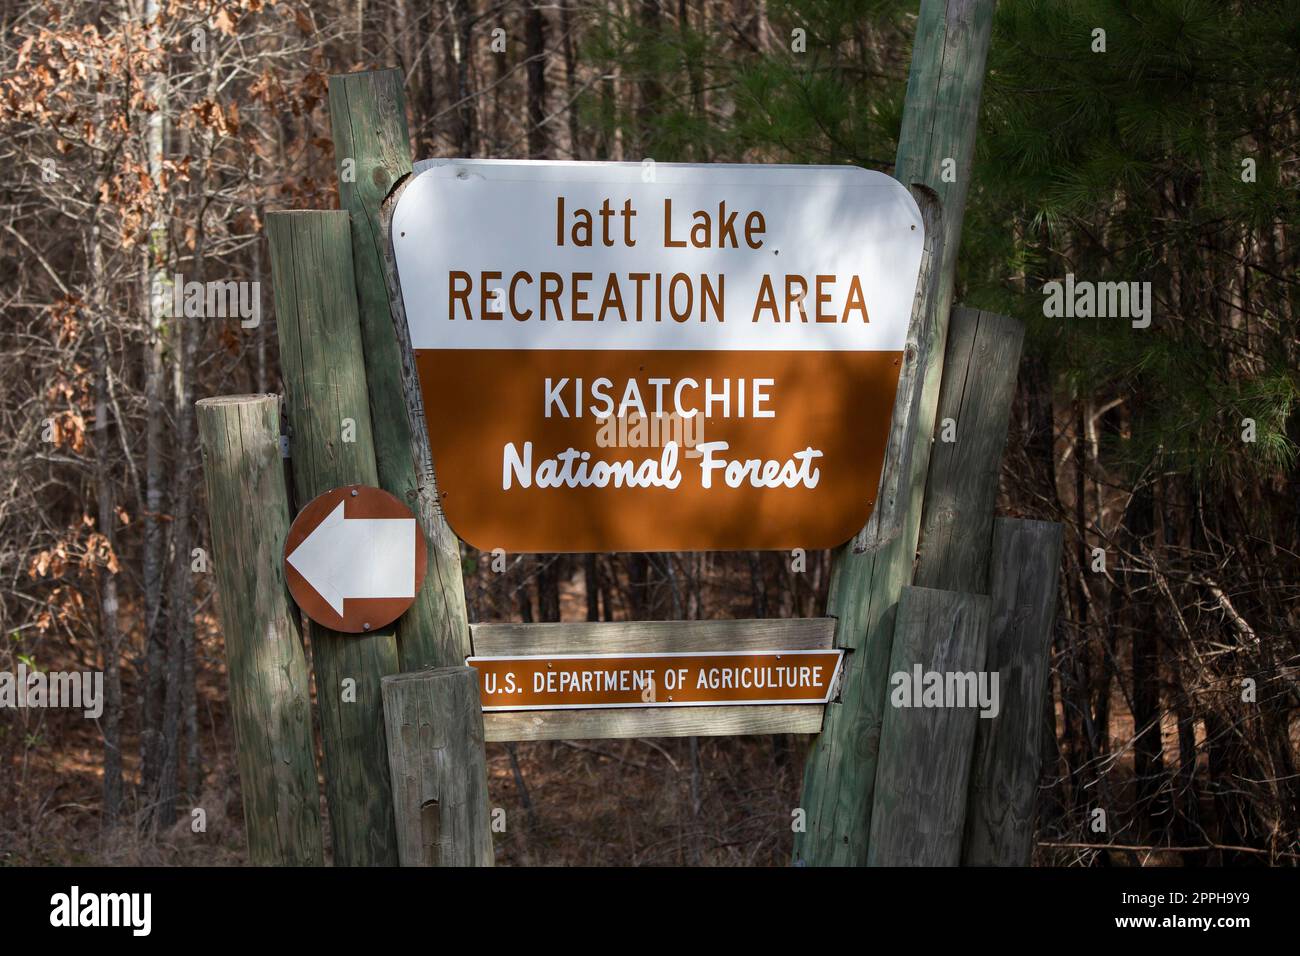 Lake Iatt Recreational Area Stock Photo